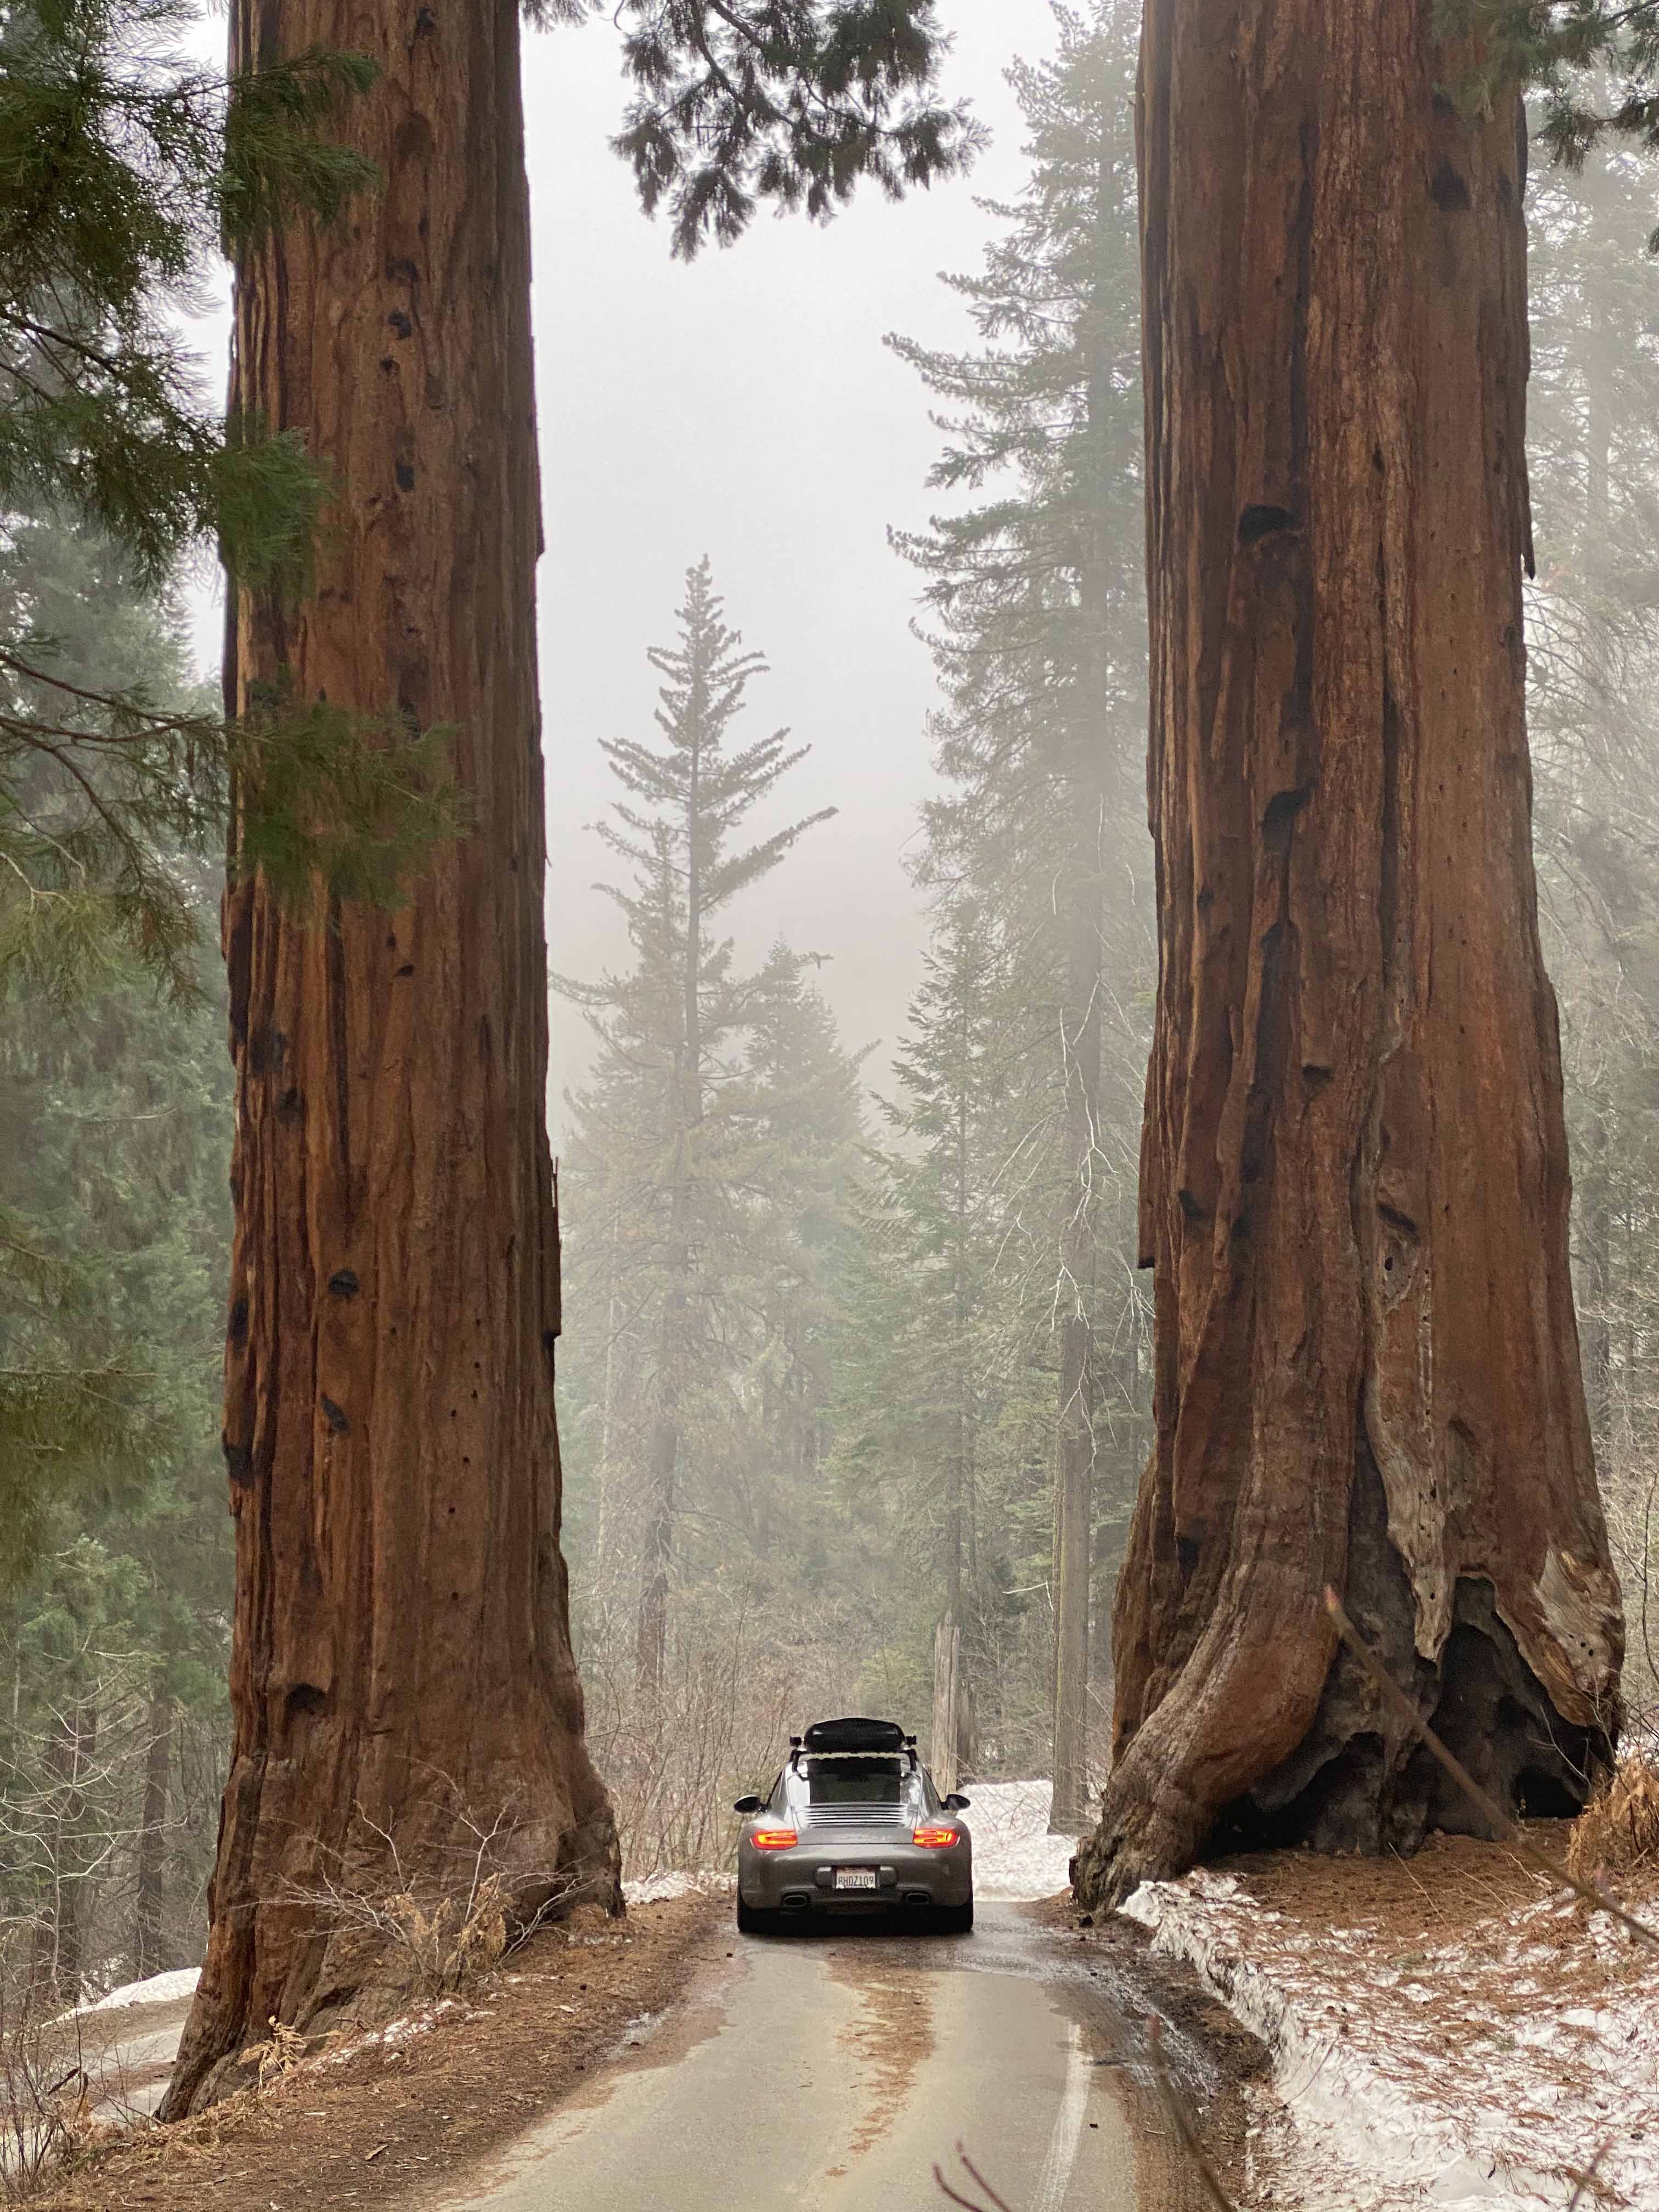 Porsche 911 (type 997) on road between two giant redwood trees